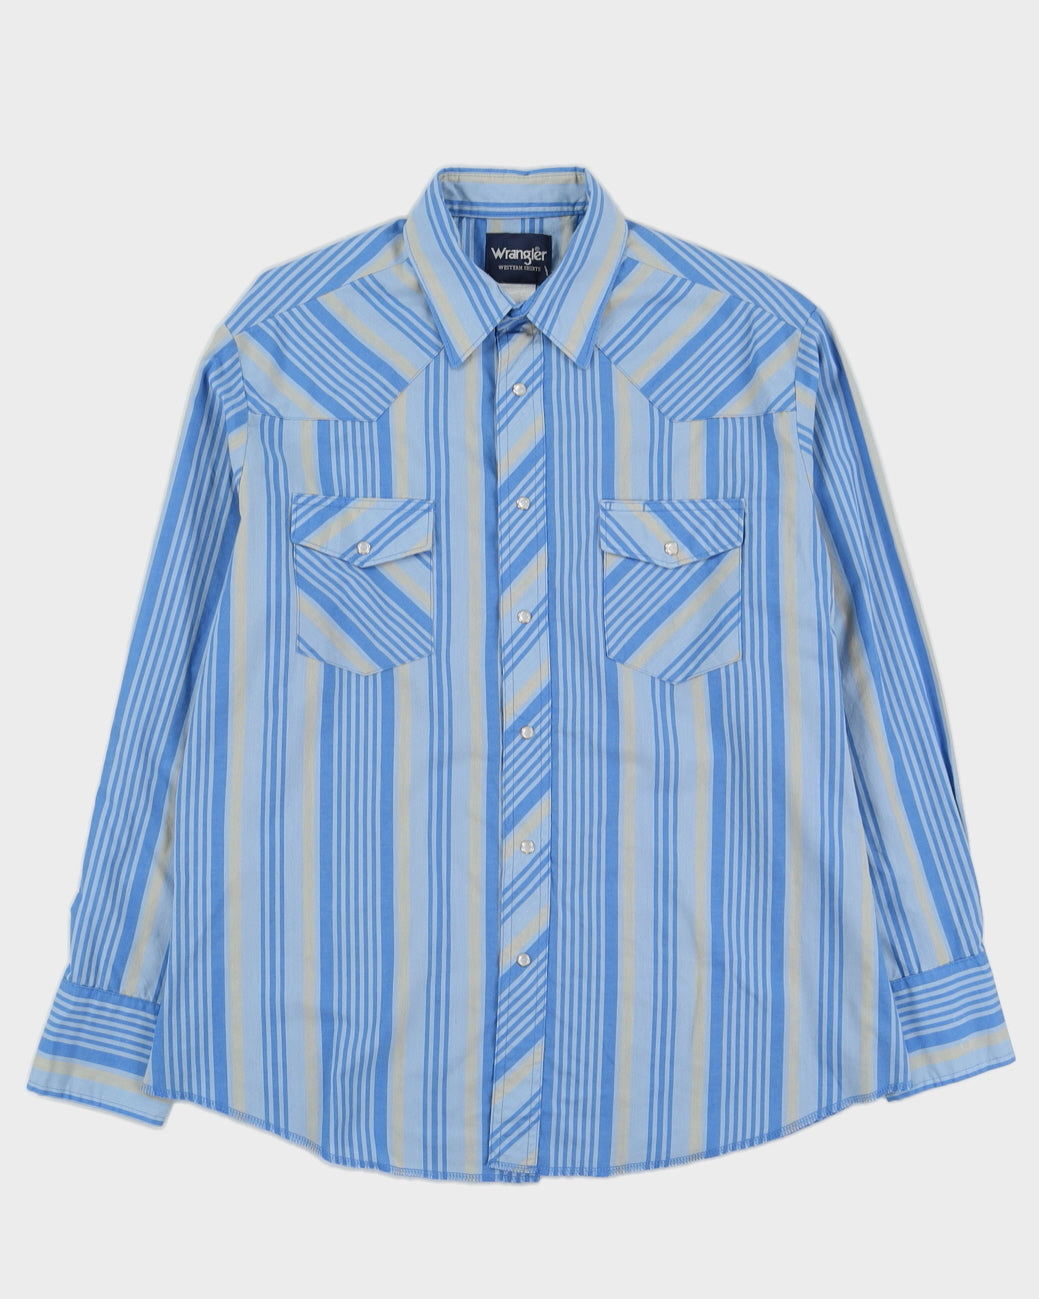 Vintage 90s Wrangler Western Striped Pattern Shirt - XXXL